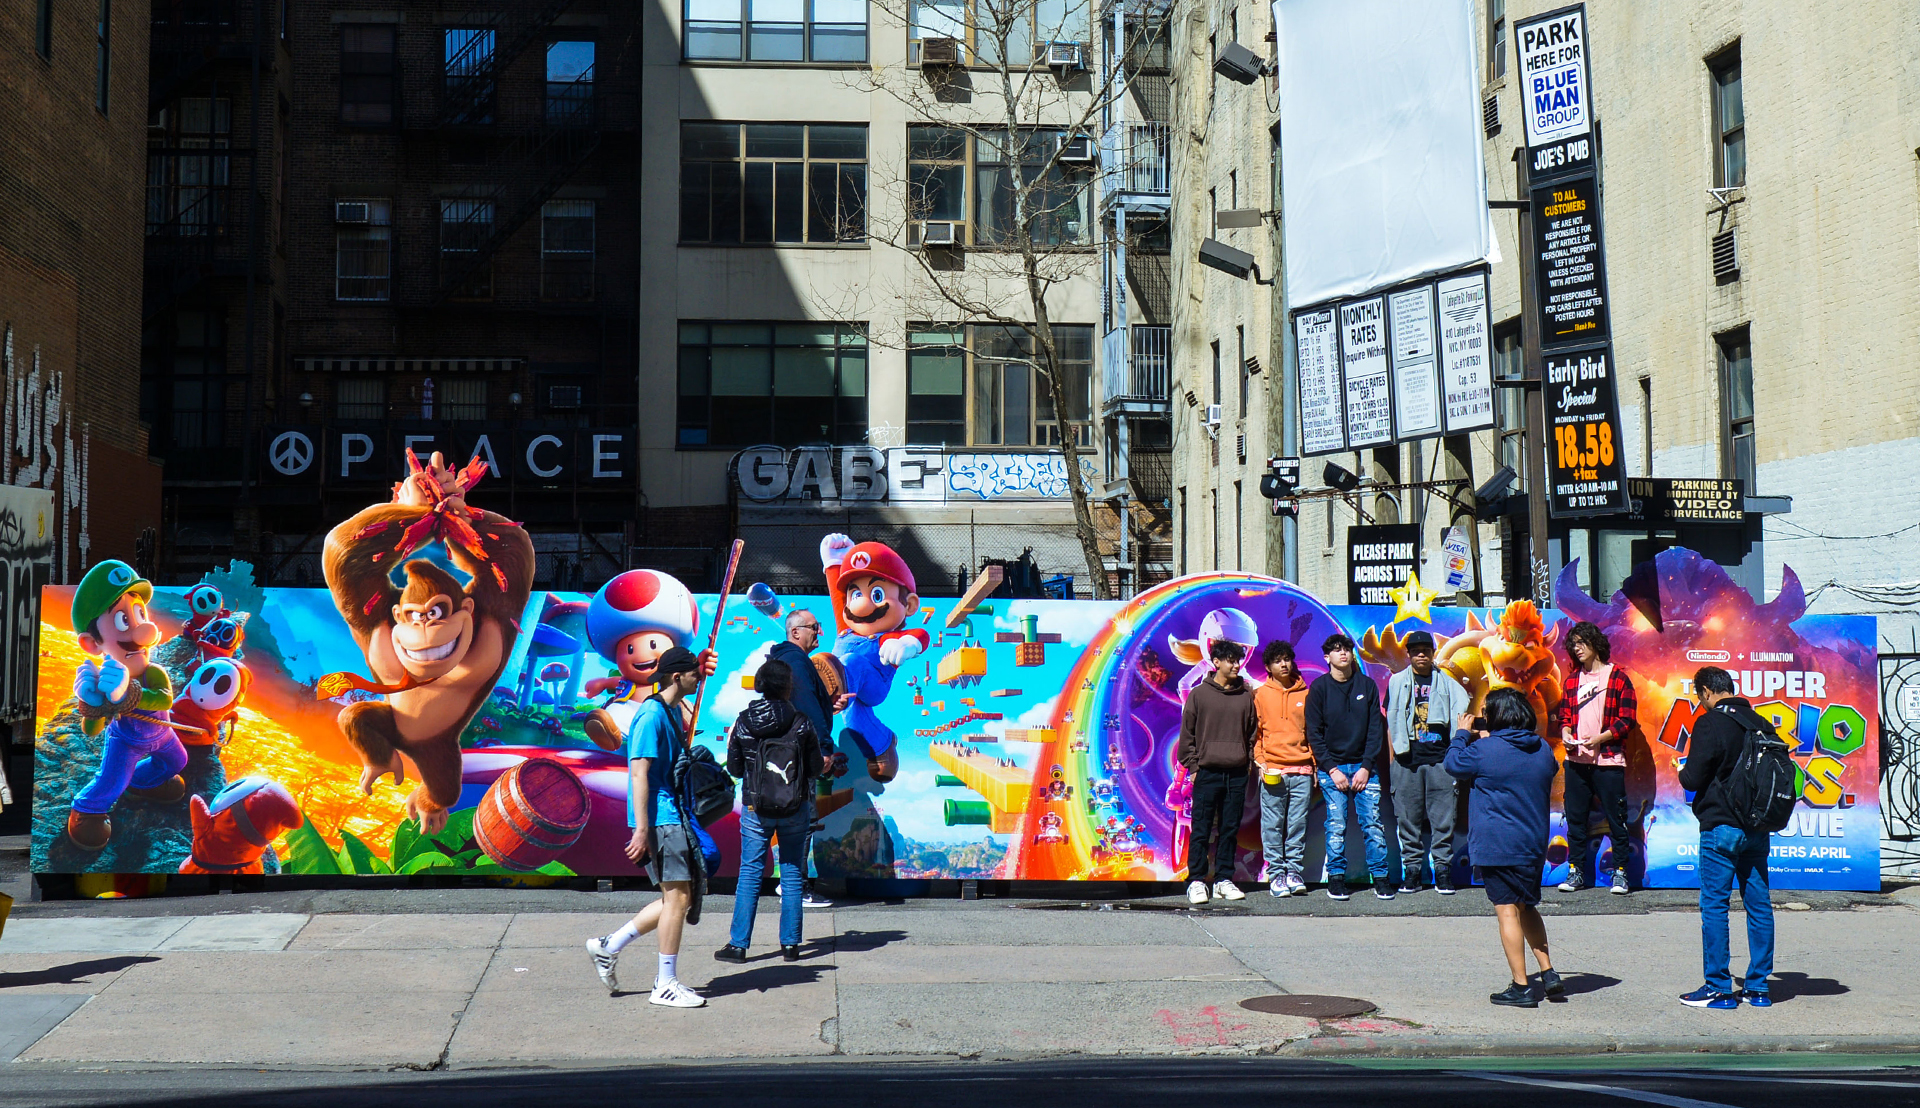 Super Mario Bros. Movie Barricade Mural Hero Image NYC Street-Level Advertising